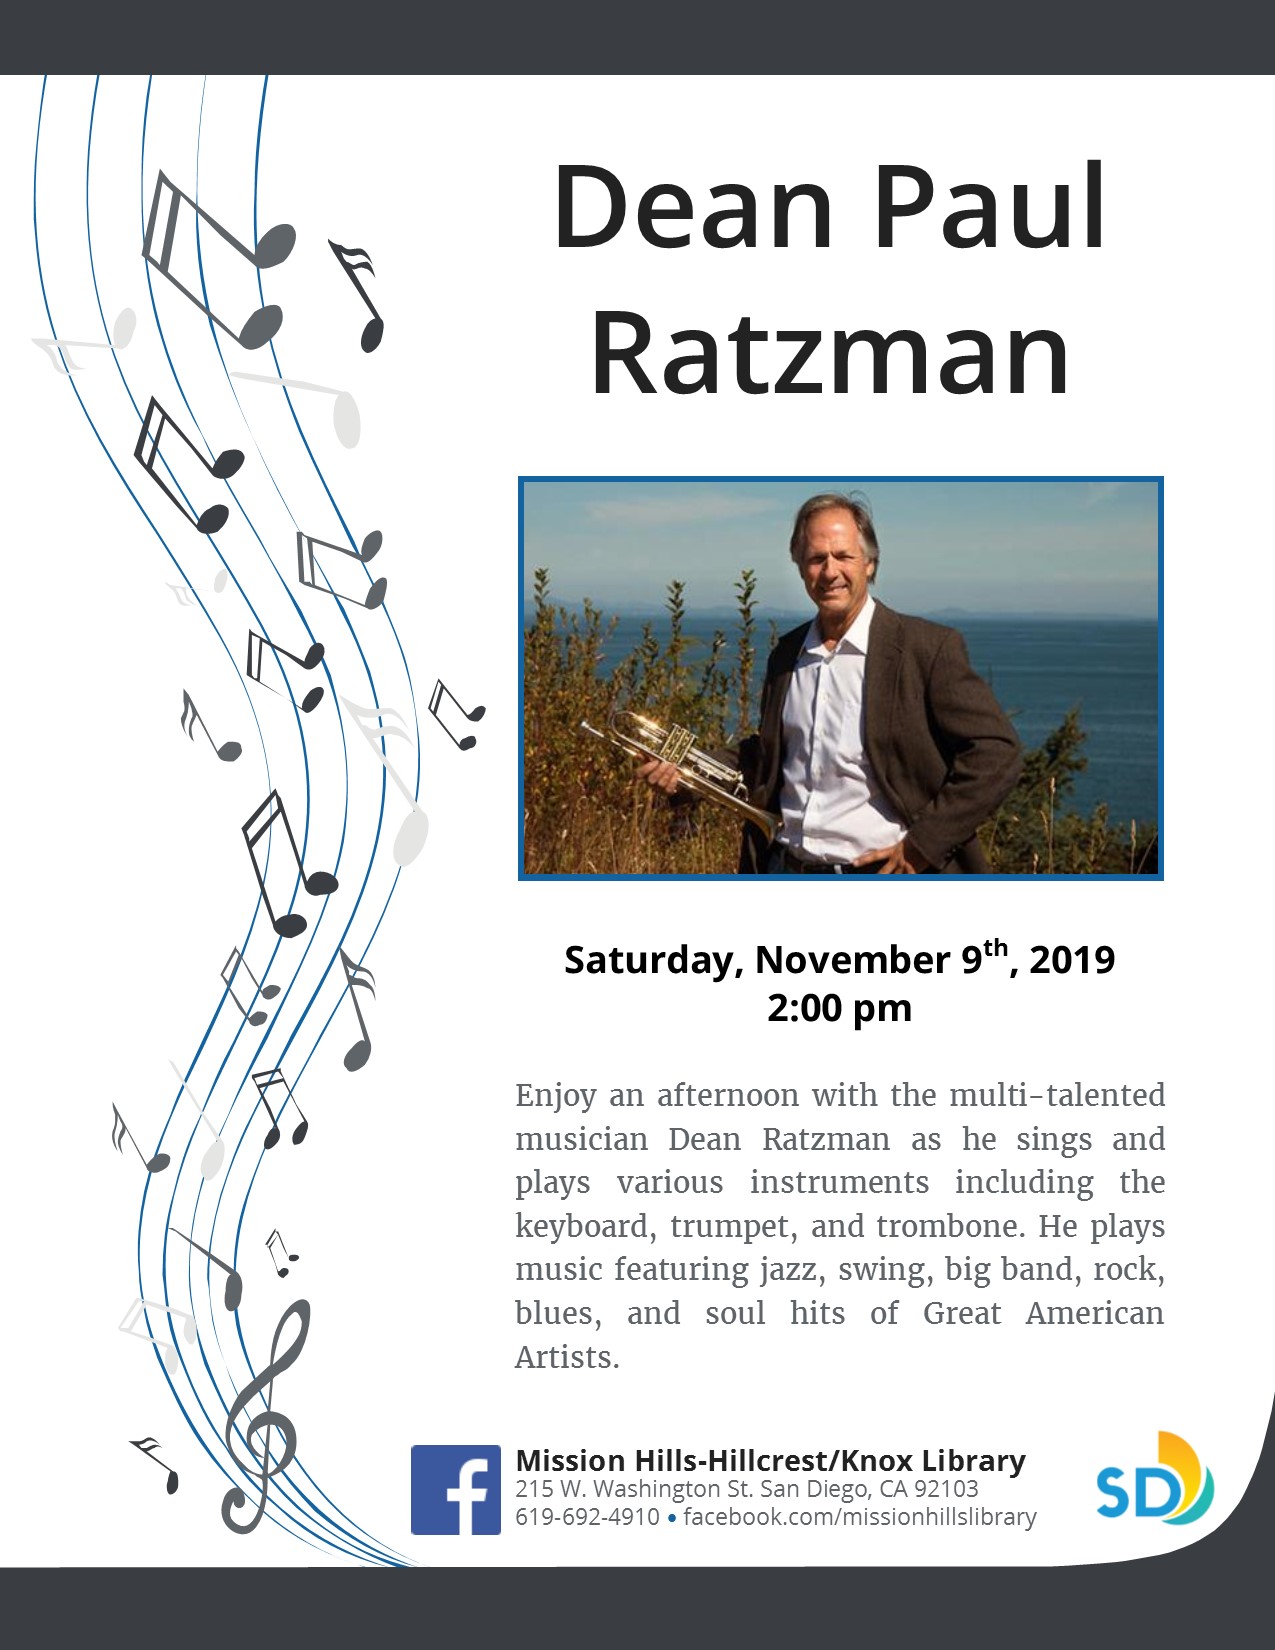 Picture of Dean Paul Ratzman with description of his music.